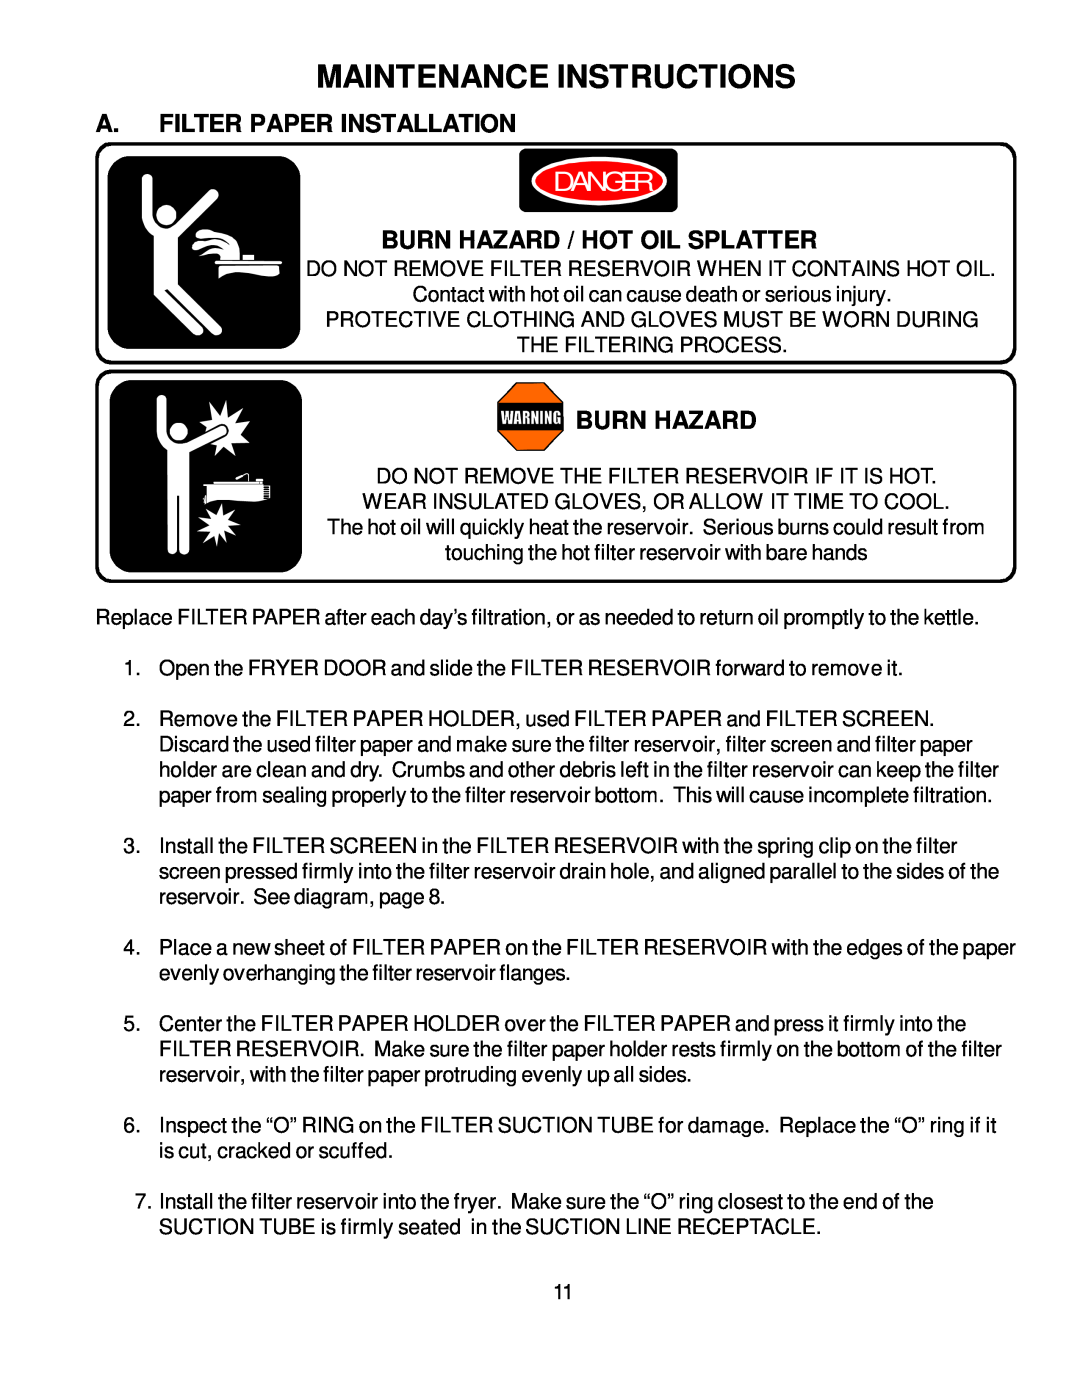 Bloomfield WFPE-30F manual Maintenance Instructions, A. Filter Paper Installation, Burn Hazard, Danger 